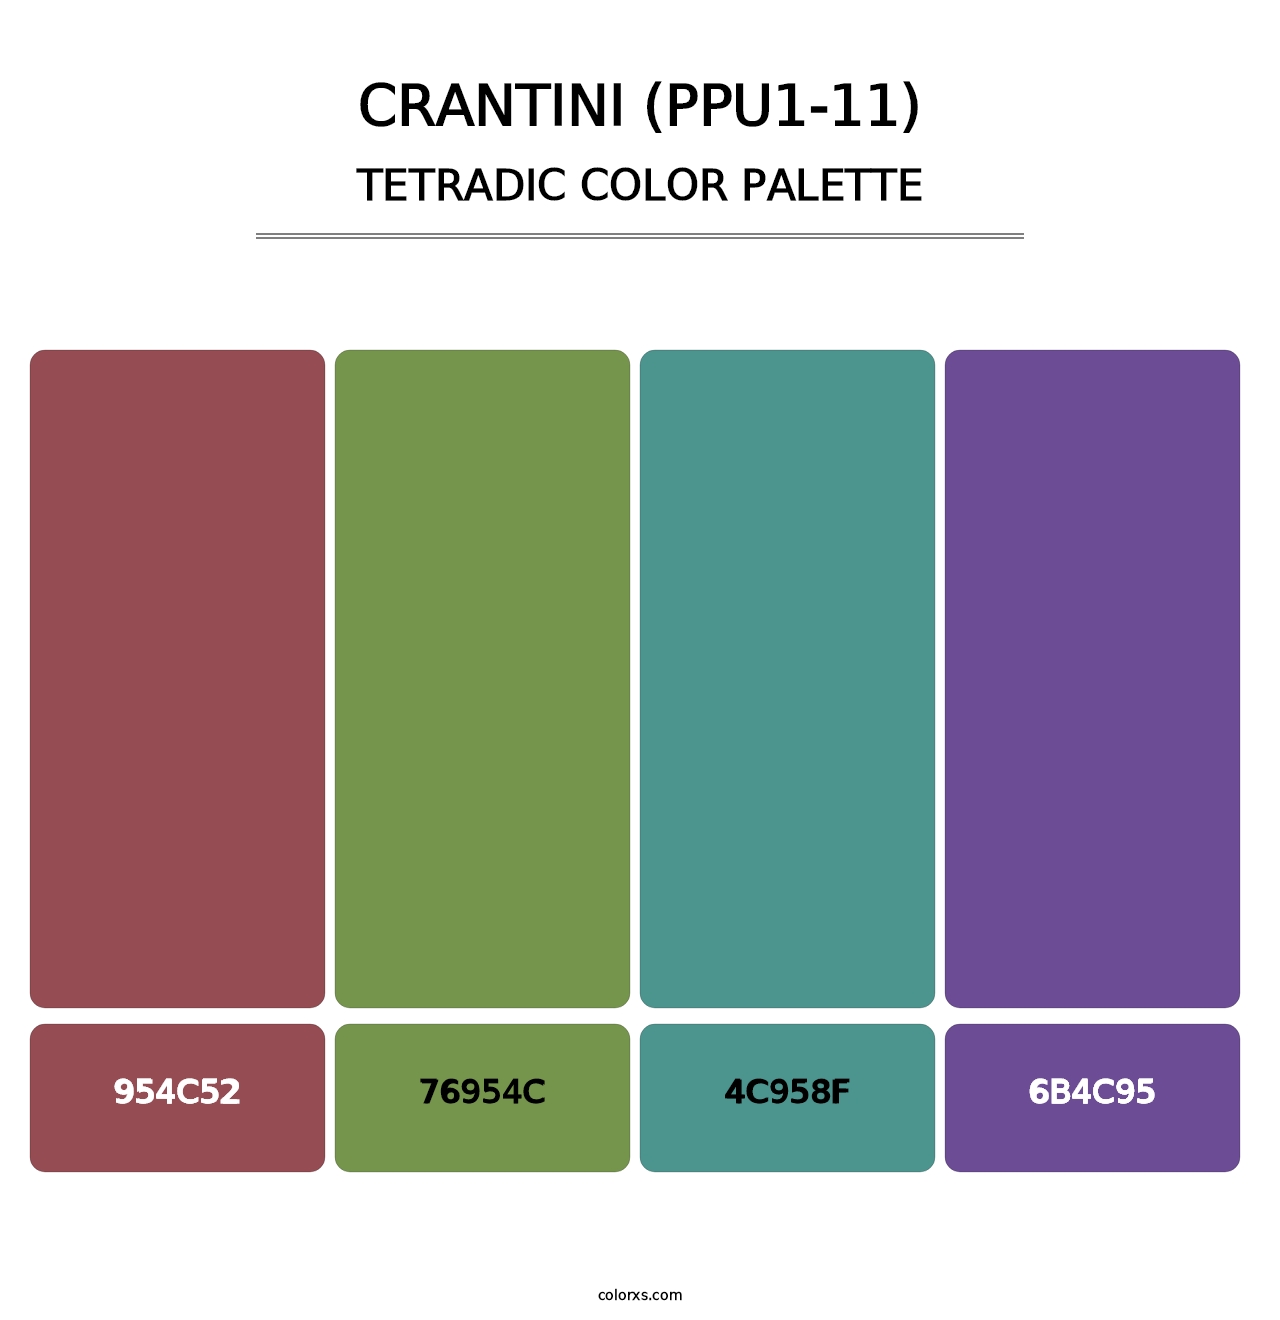 Crantini (PPU1-11) - Tetradic Color Palette